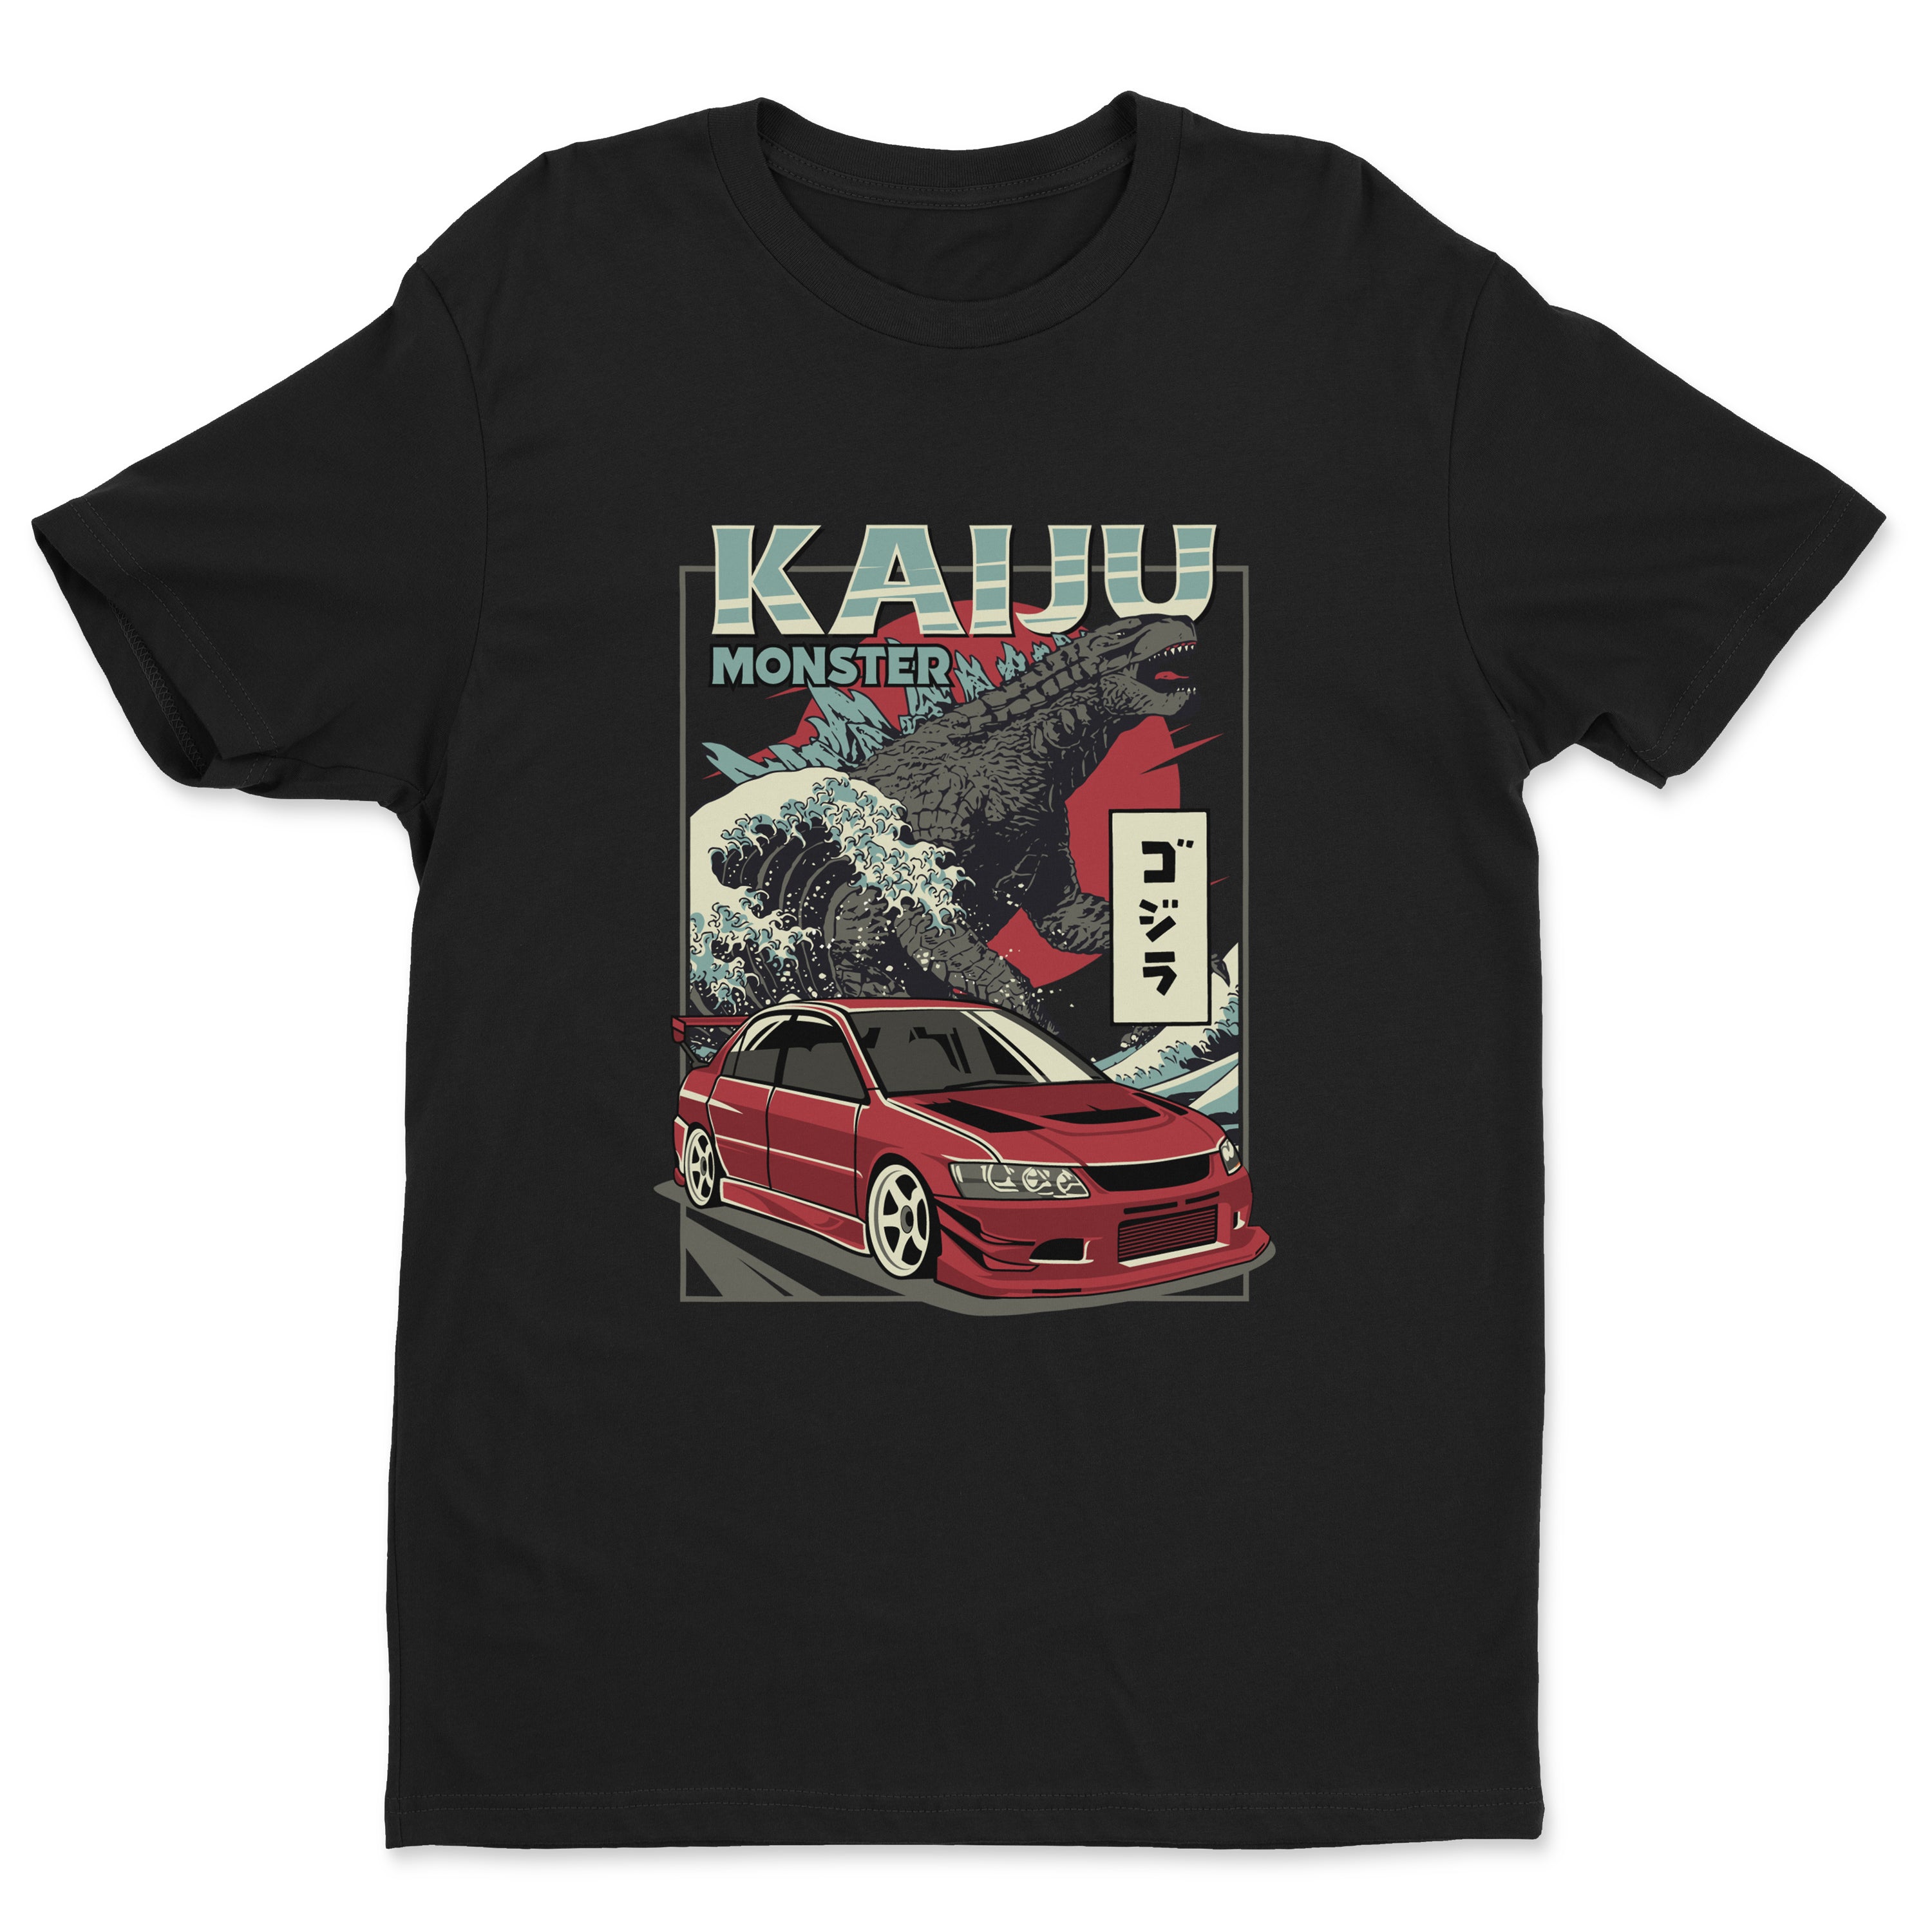 Mitsubishi Lancer Evolution Kaiju Car T-Shirt in black.